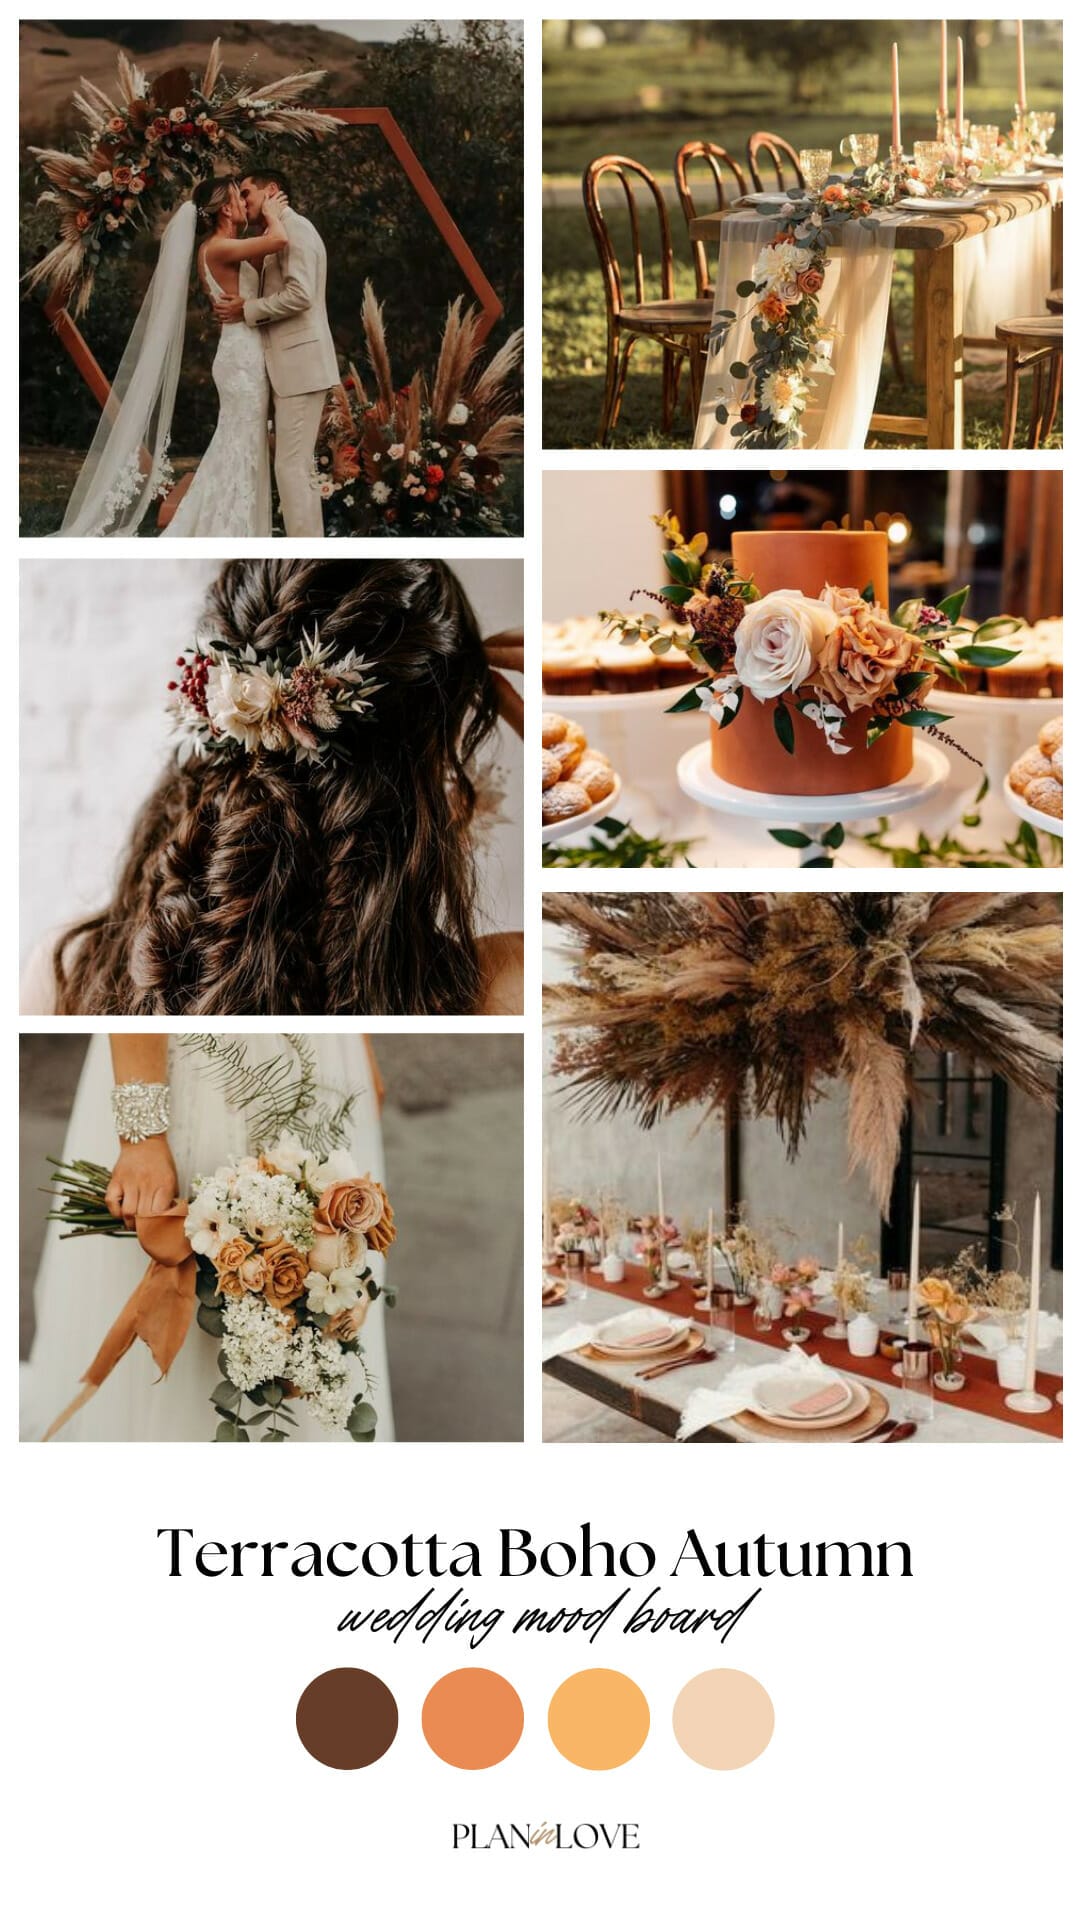 Terracotta Boho Autumn (Pop Romance) Wedding Mood Board Inspiration Color Palette Plan In Love